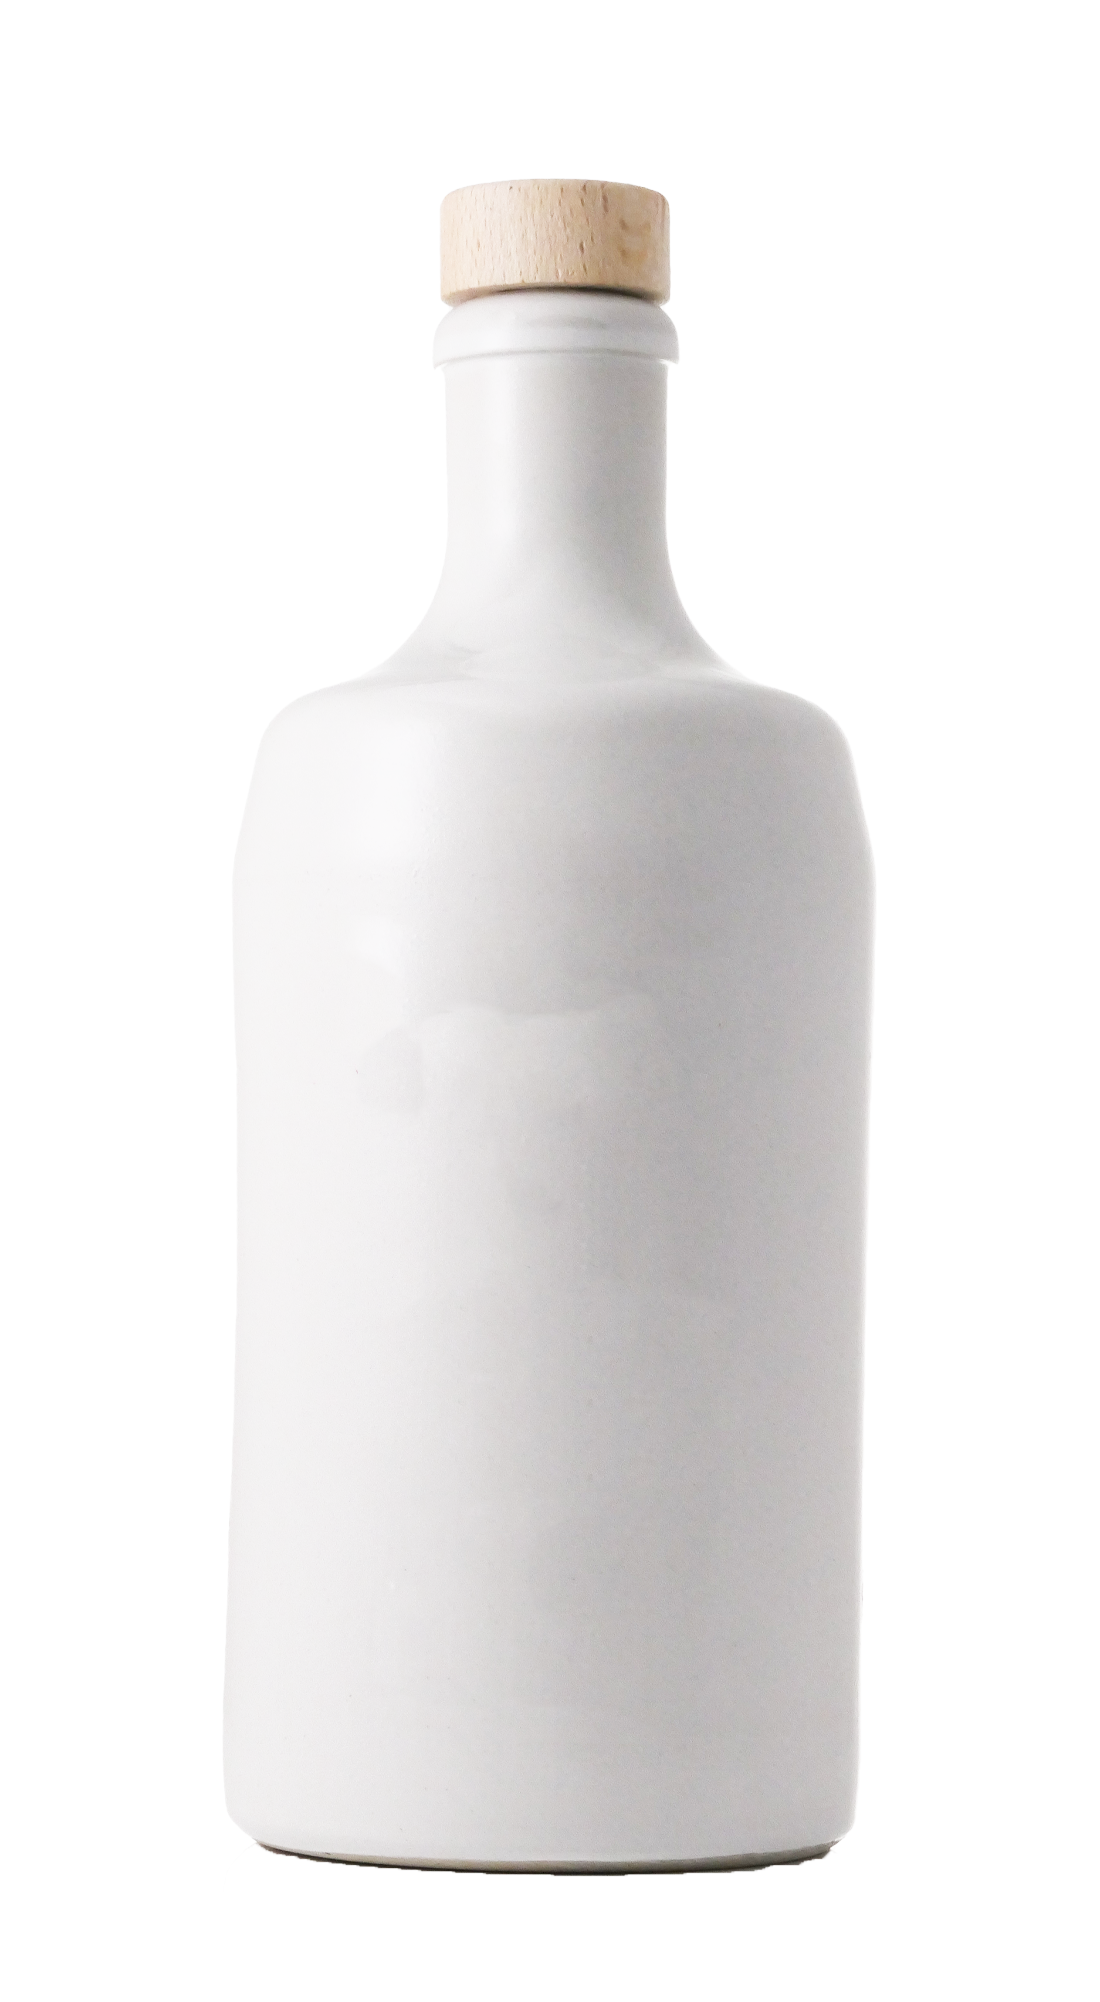 Accuracy International personalisation Example bottle